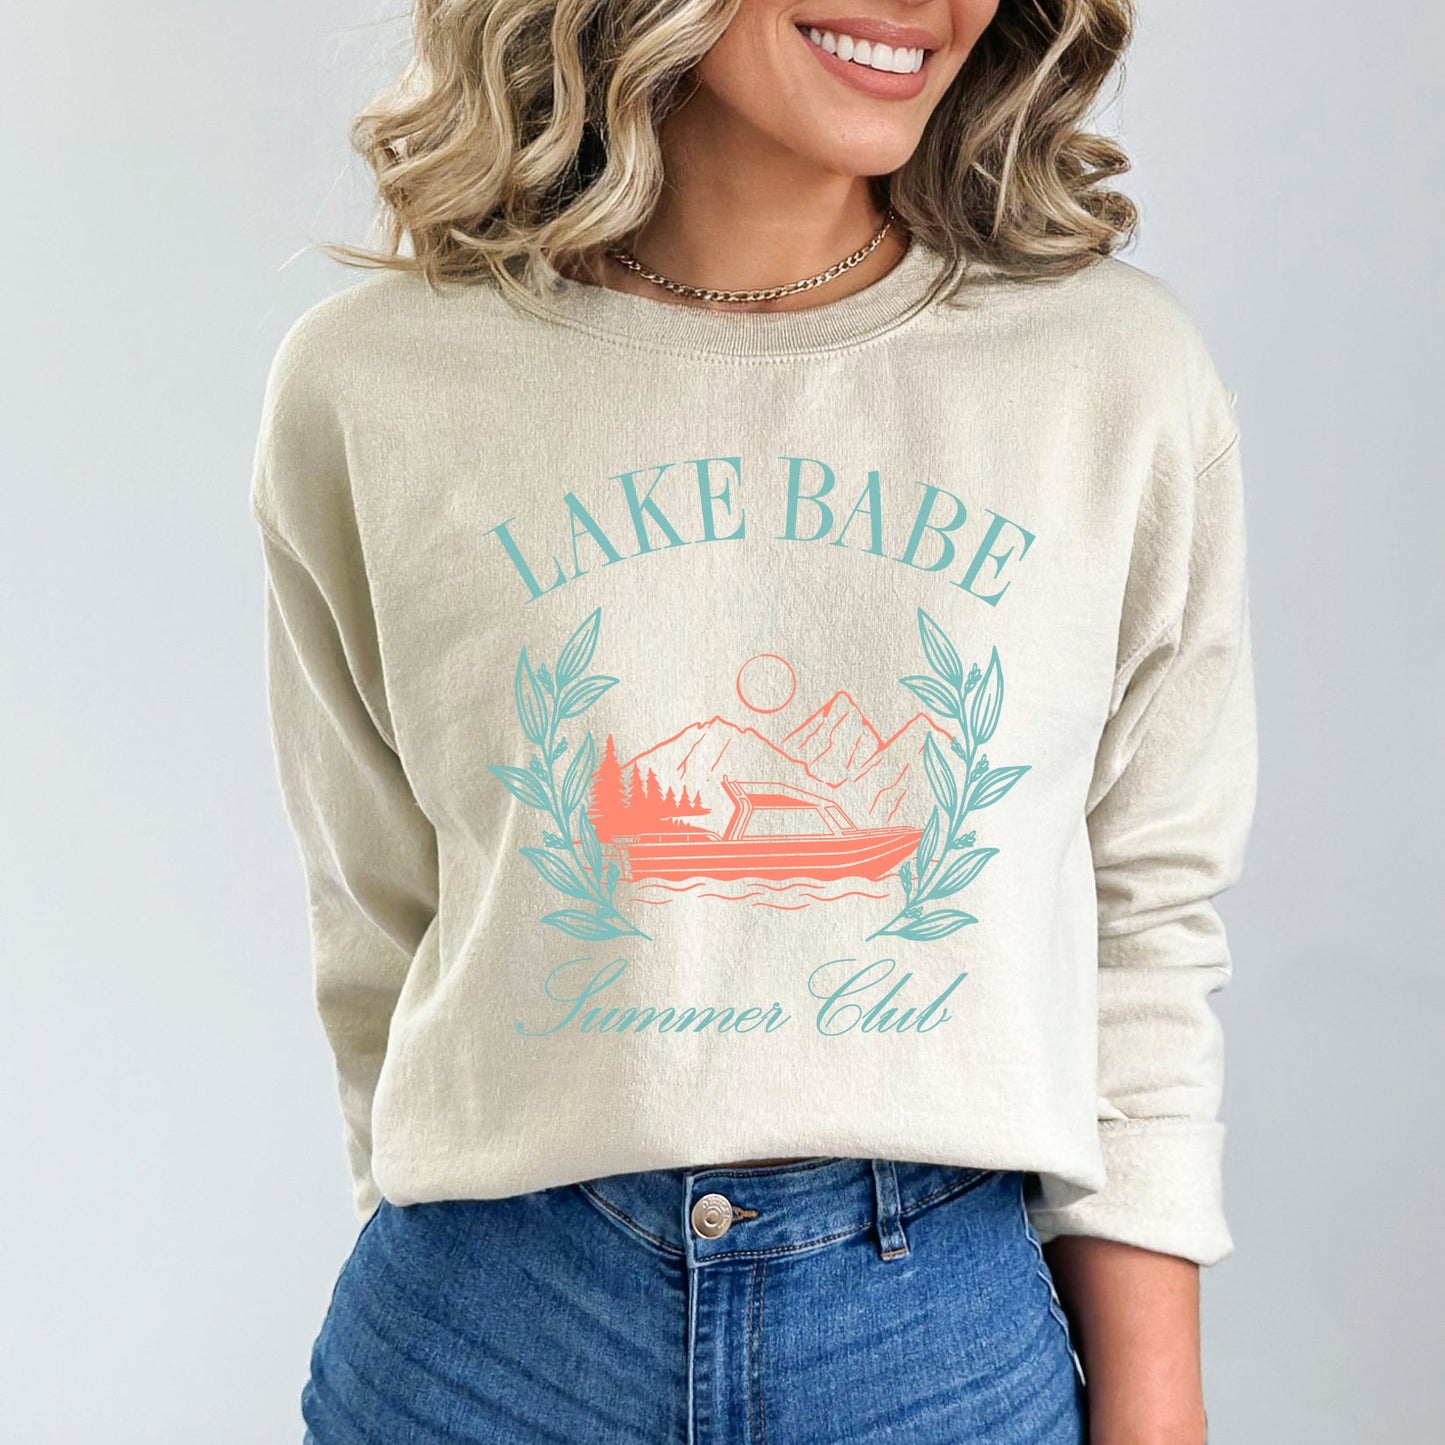 Lake Babe Boat | Sweatshirt